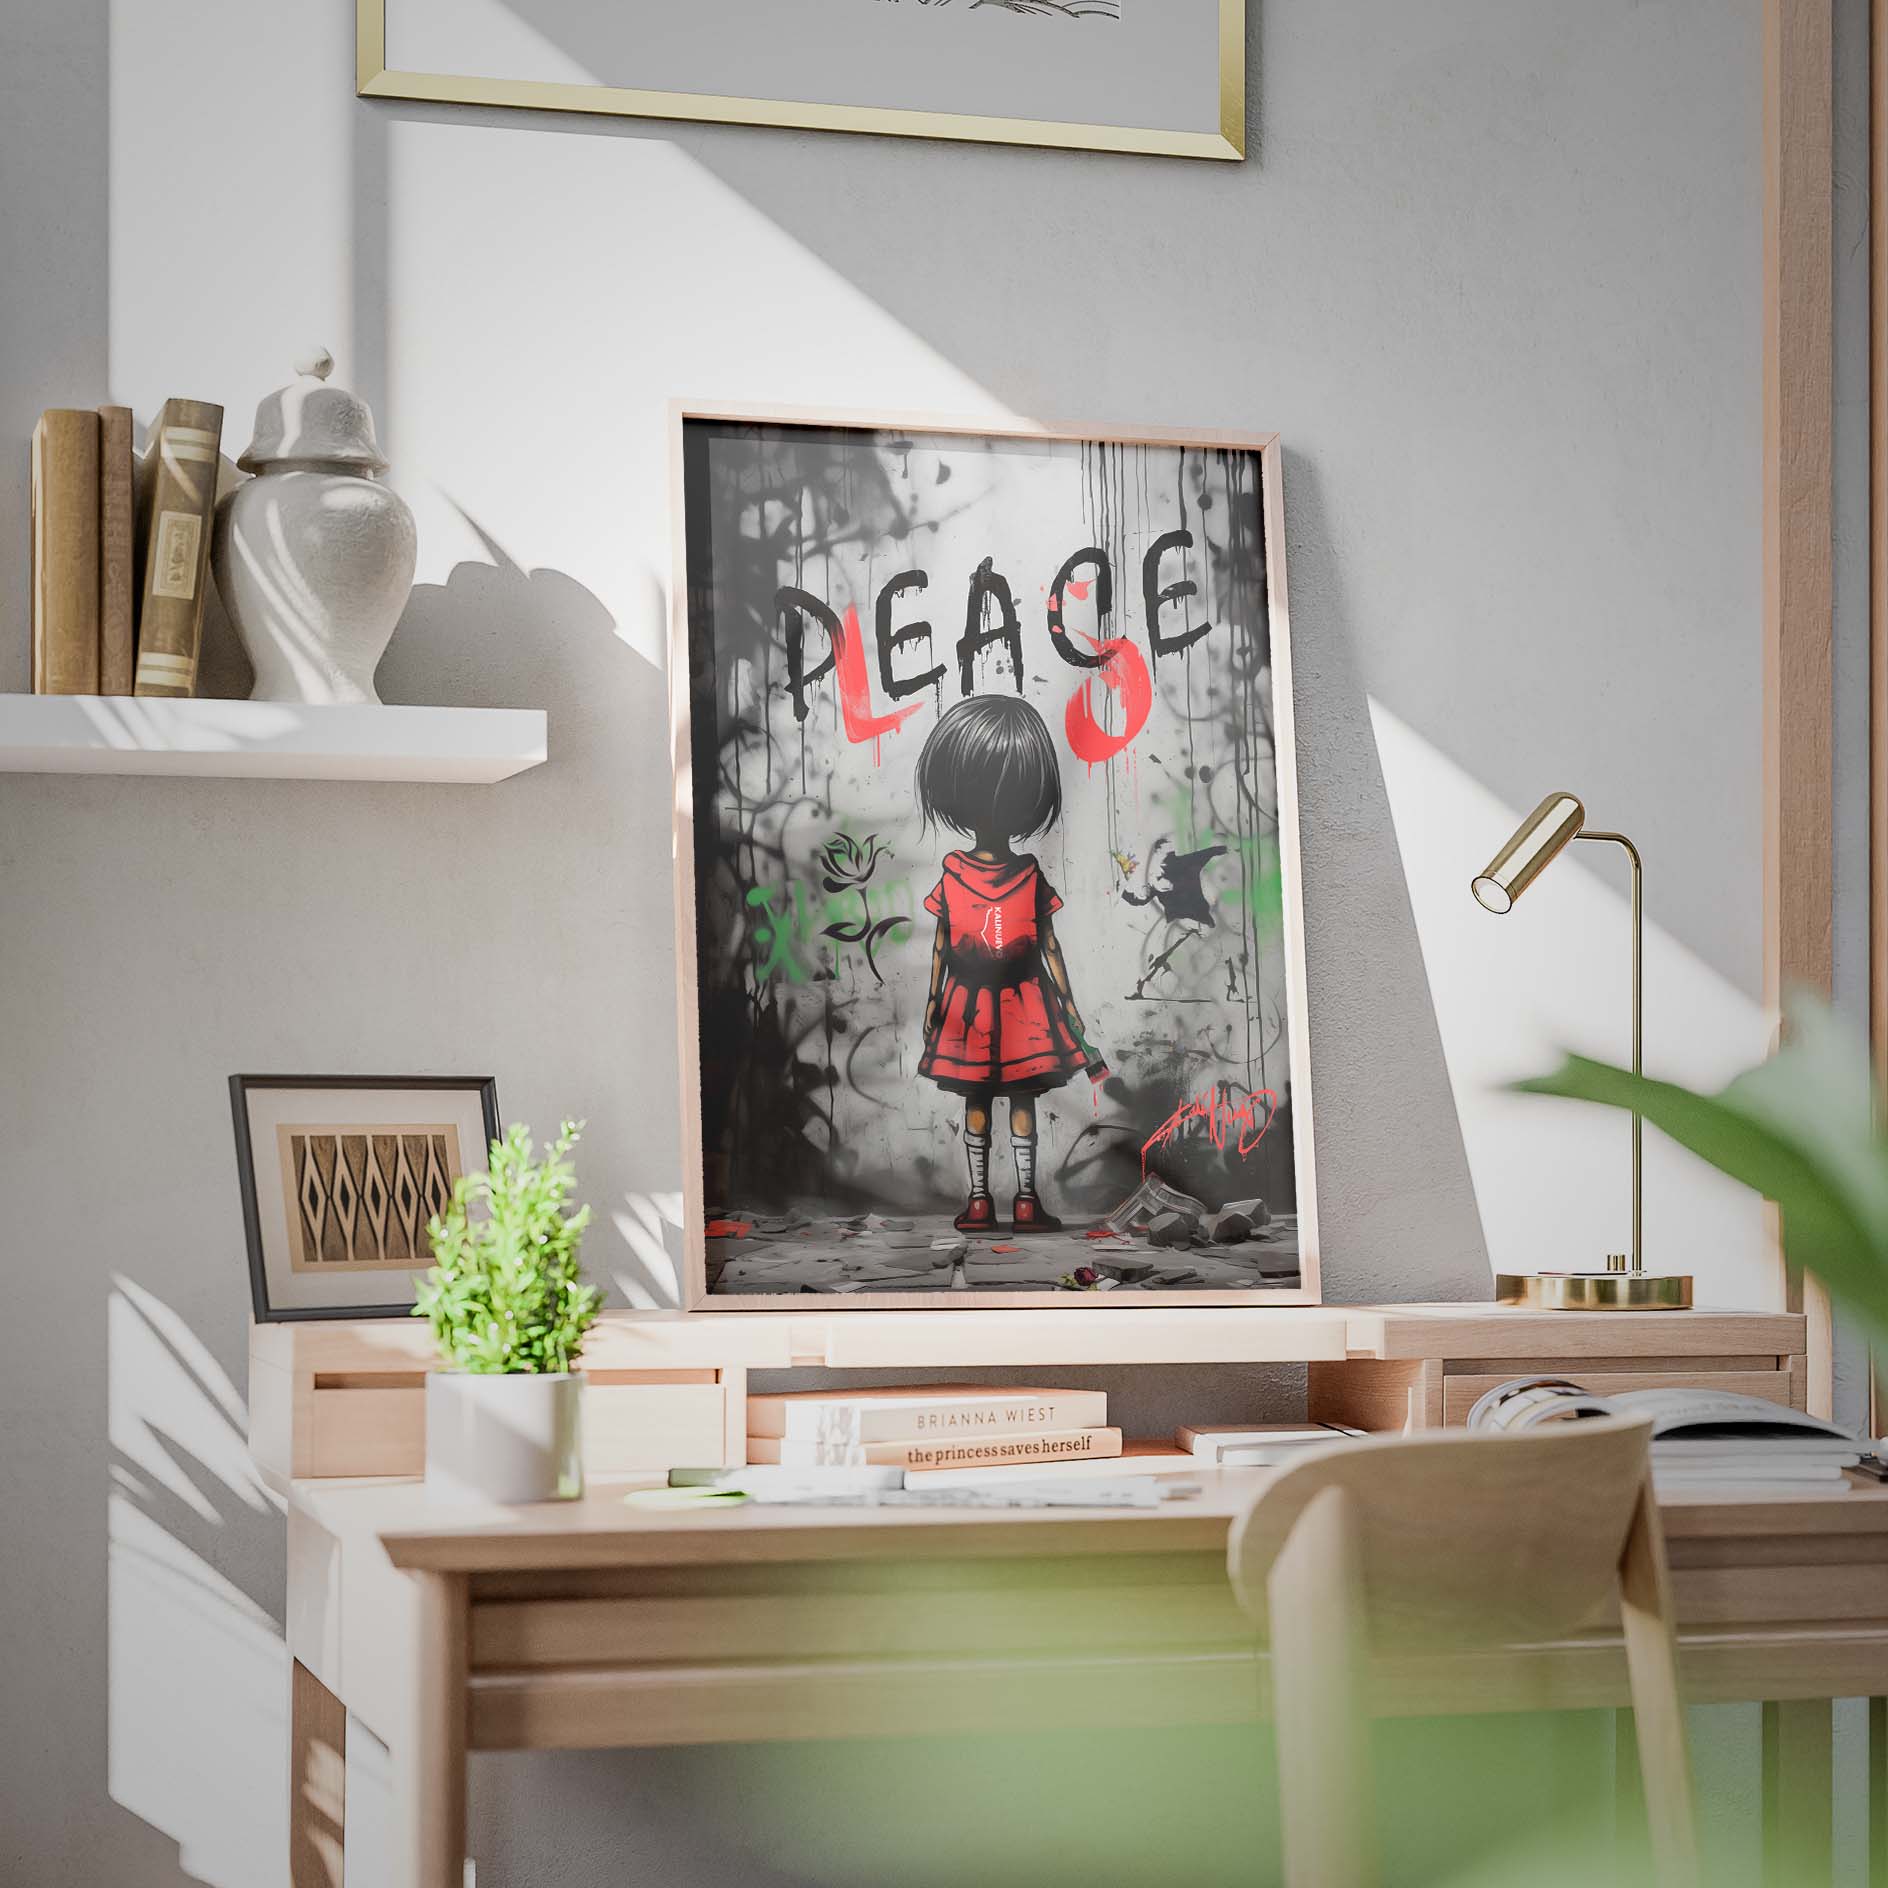 Peace motivational inspirational poster